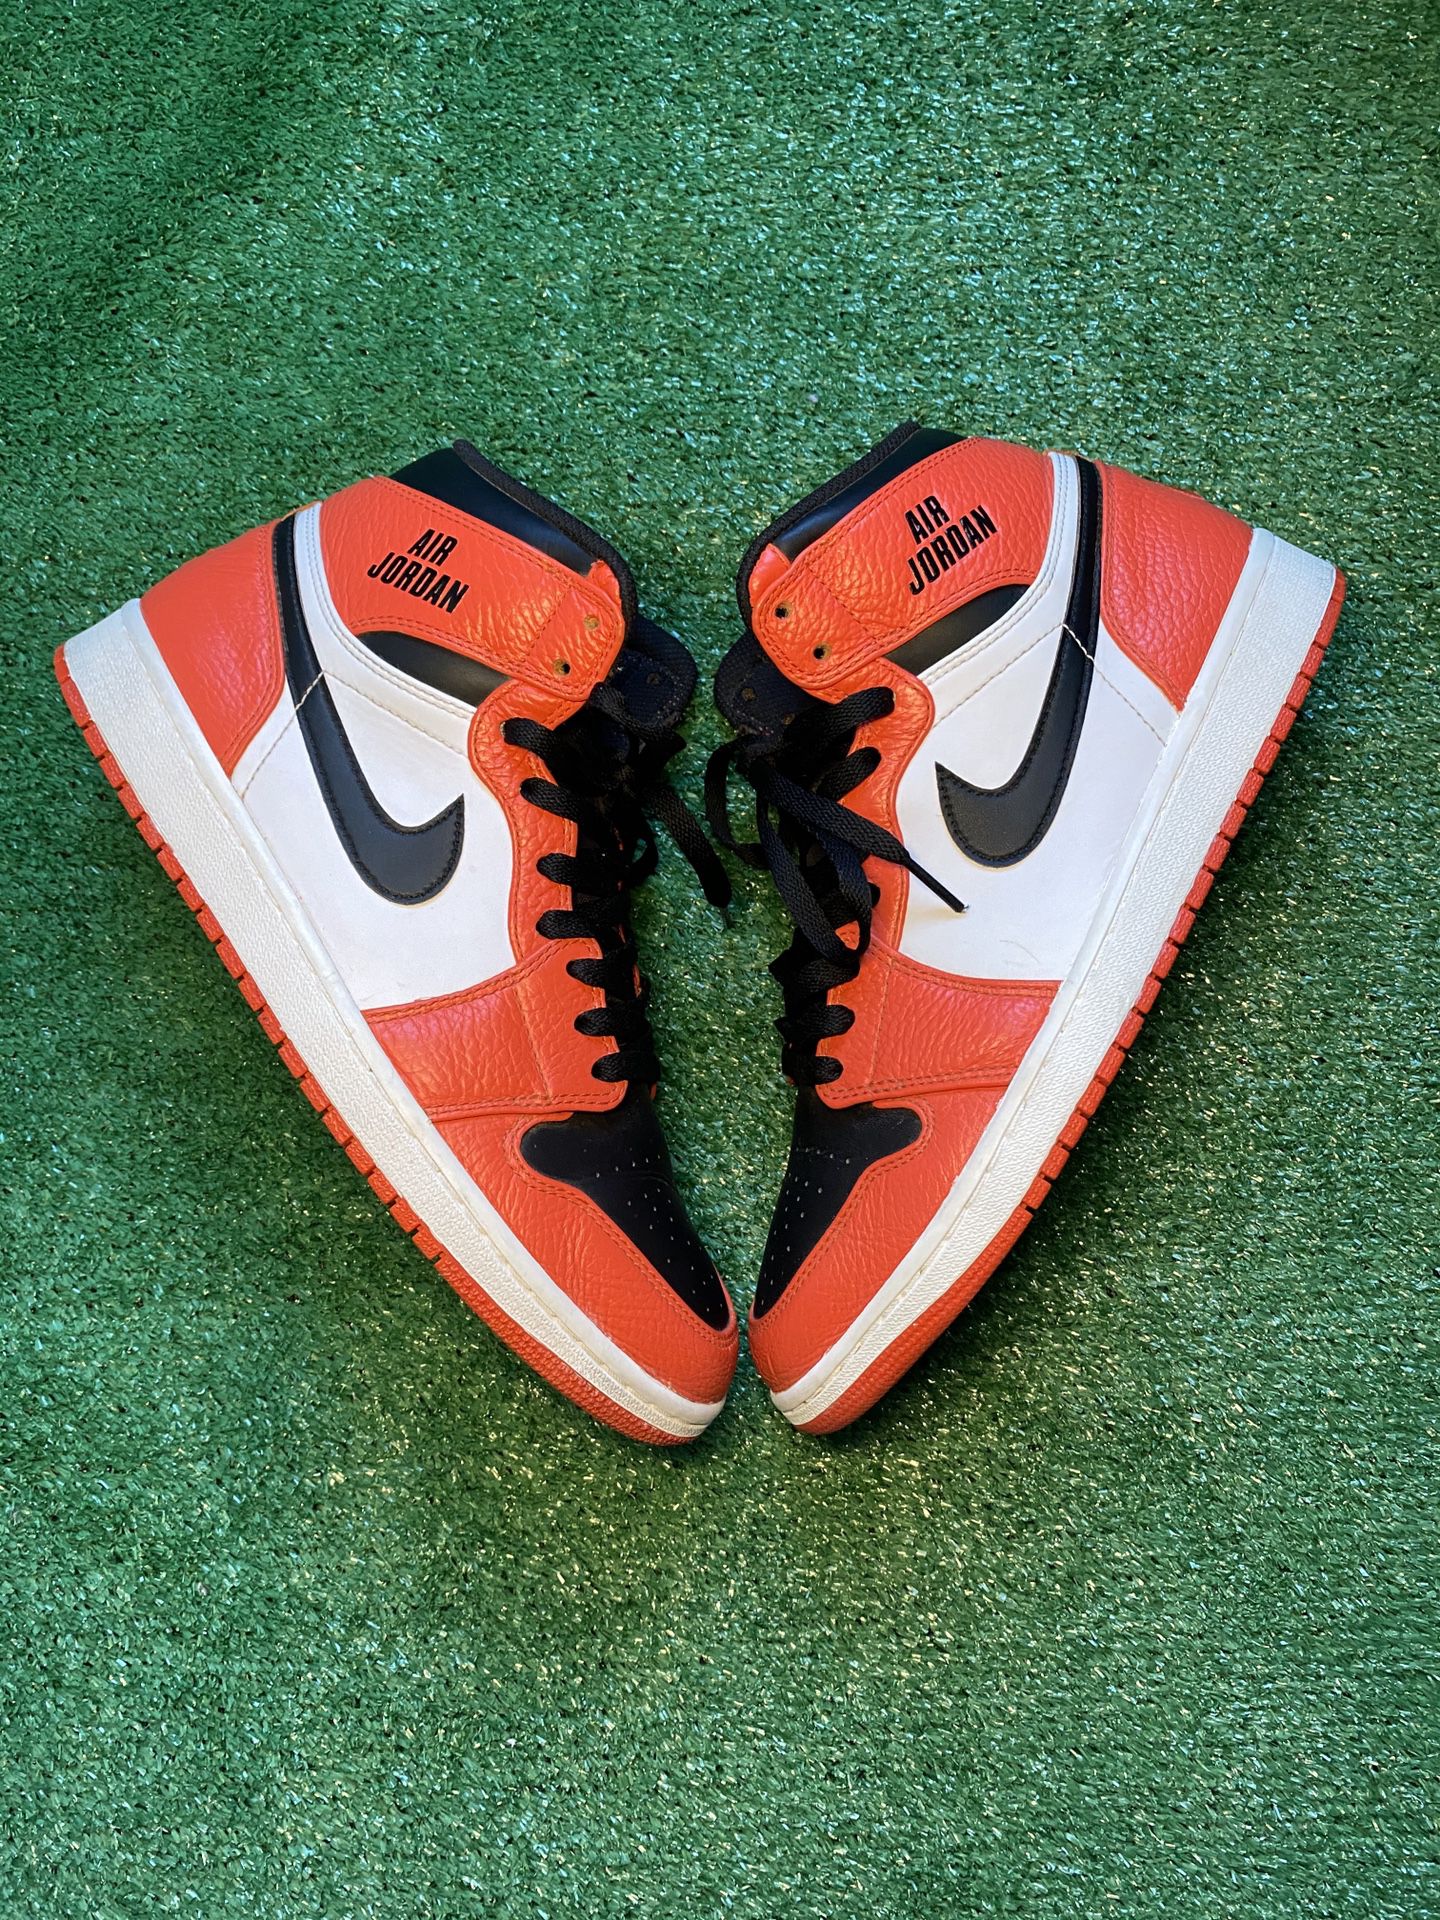 Jordan 1 max orange size 10.5